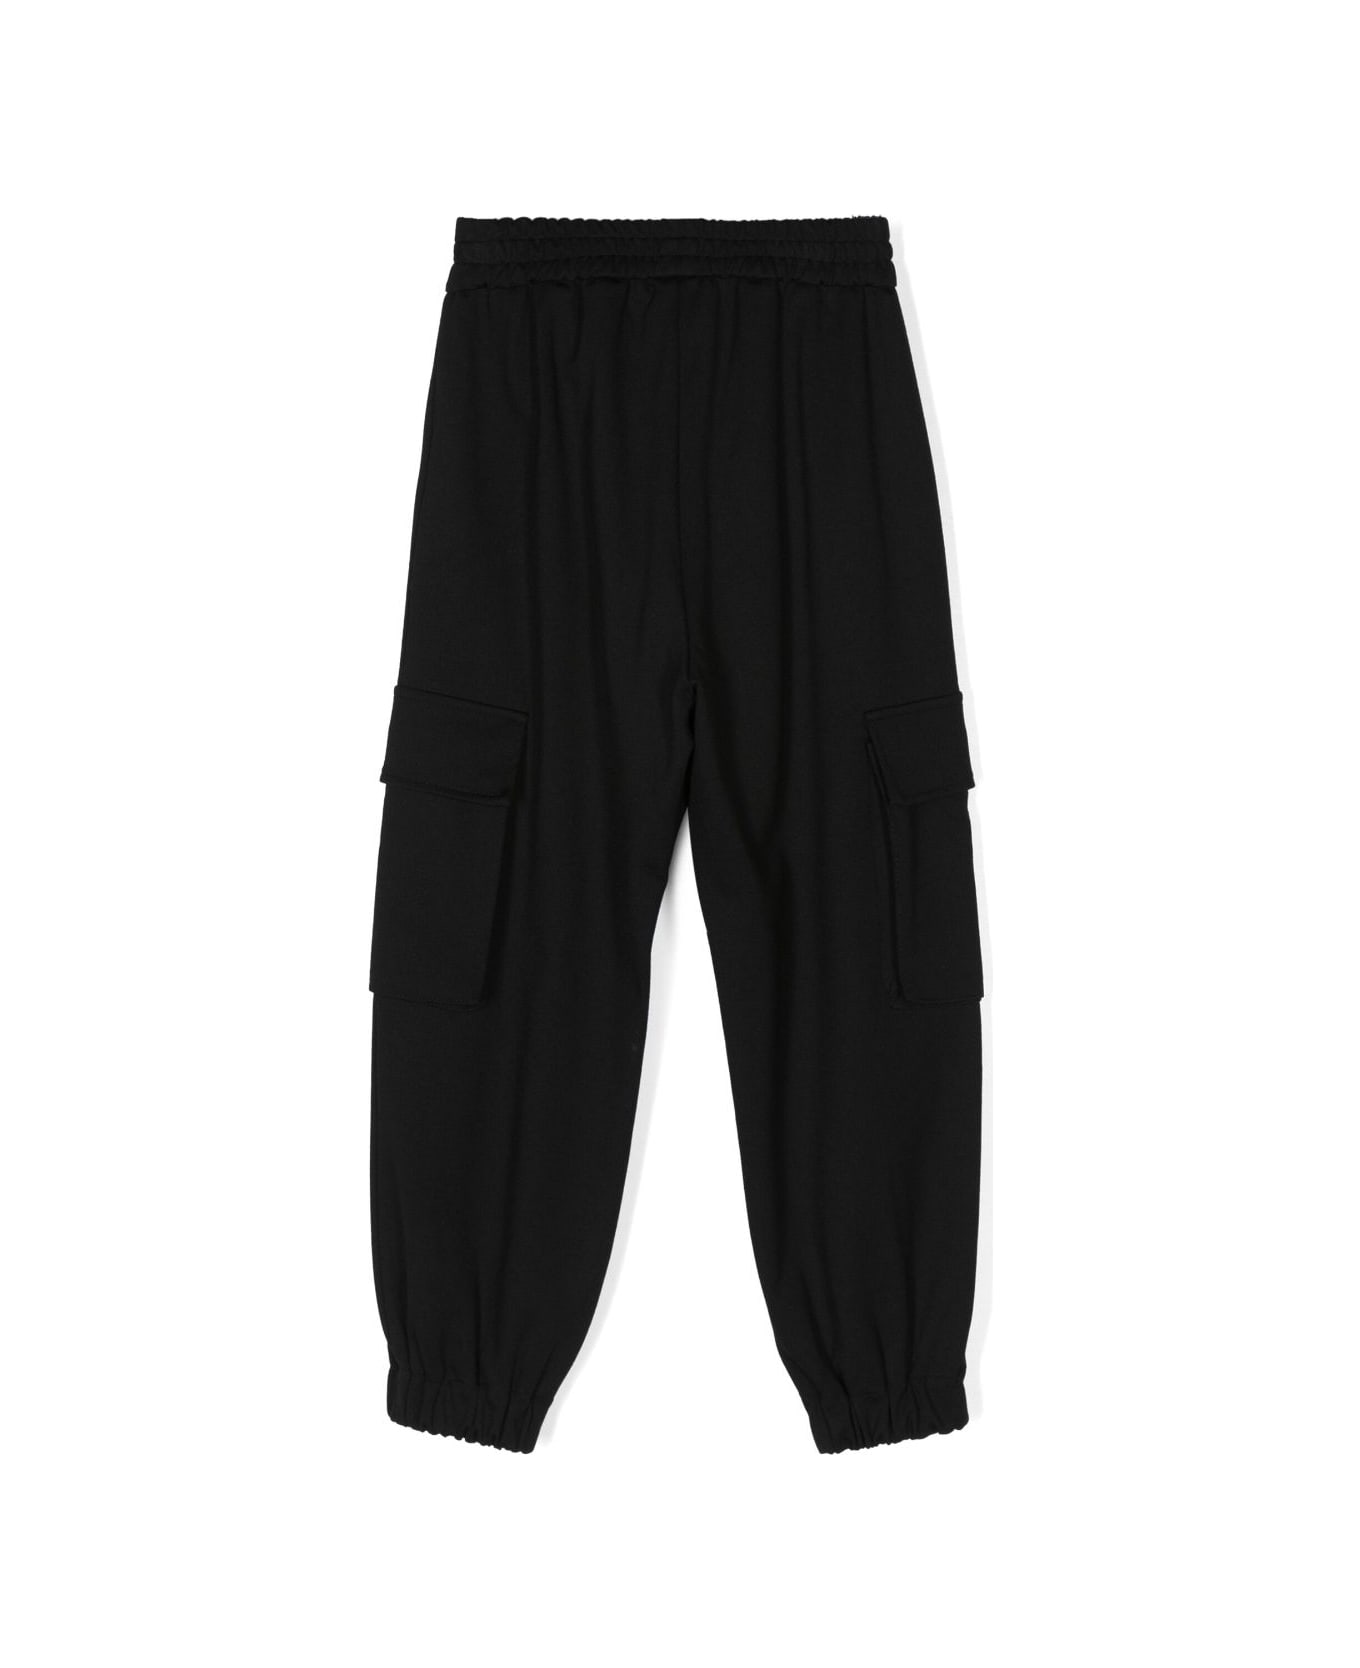 Balmain Sport Trousers - Black